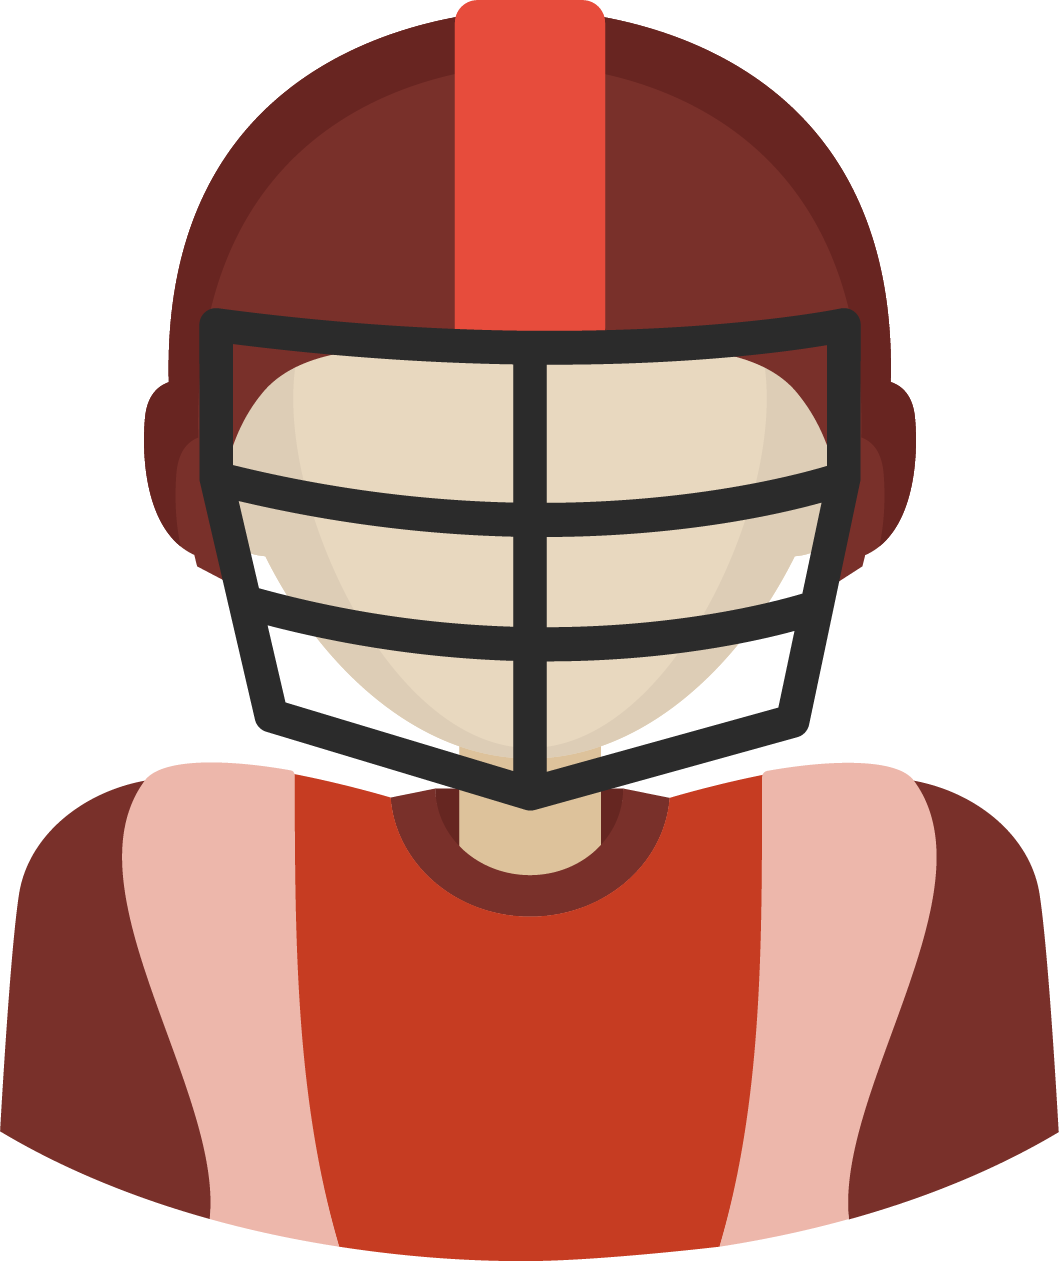 A Cartoon Of A Football Player